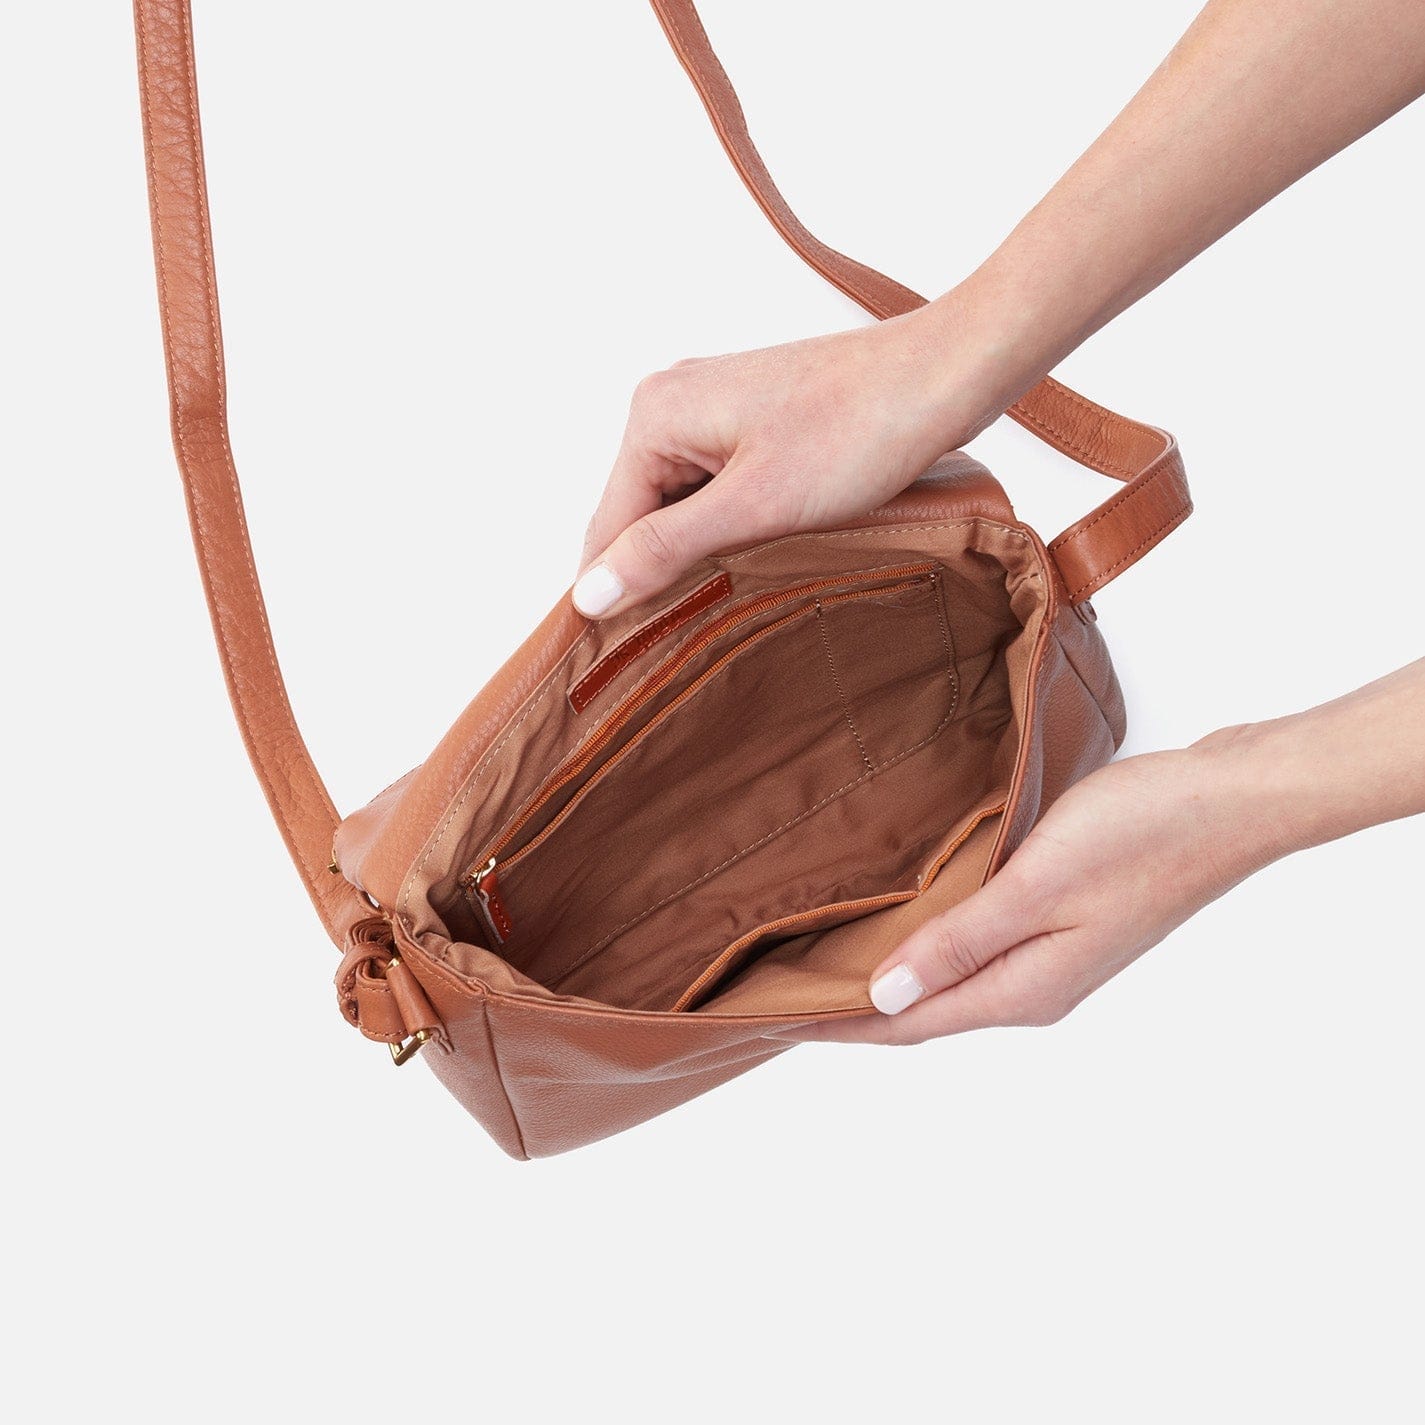 HOBO Fern Sling Bag - Pebbled Leather in Chalk